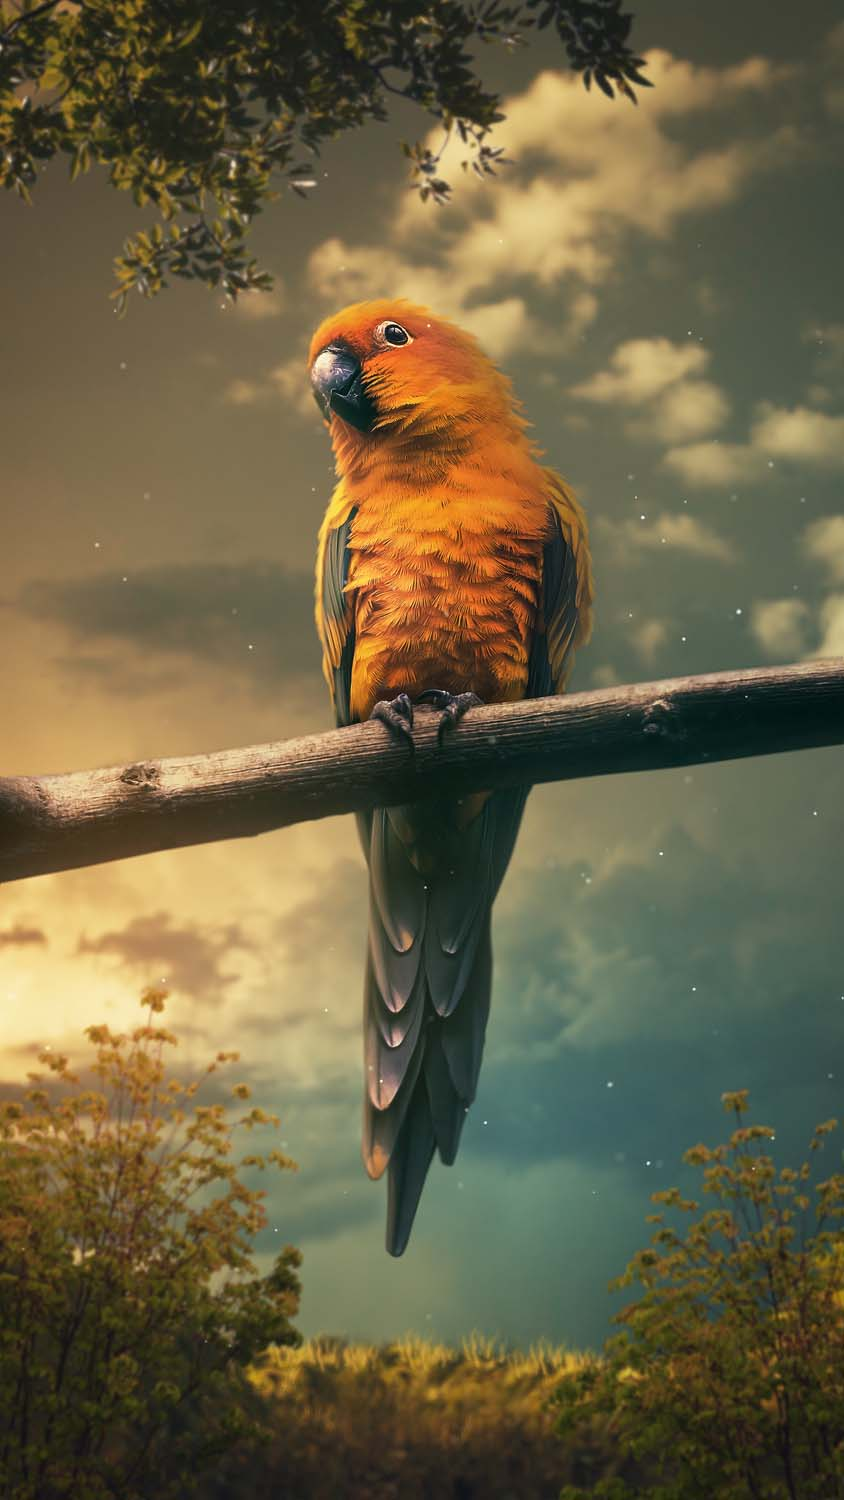 Cute Parrot IPhone Wallpaper HD  IPhone Wallpapers